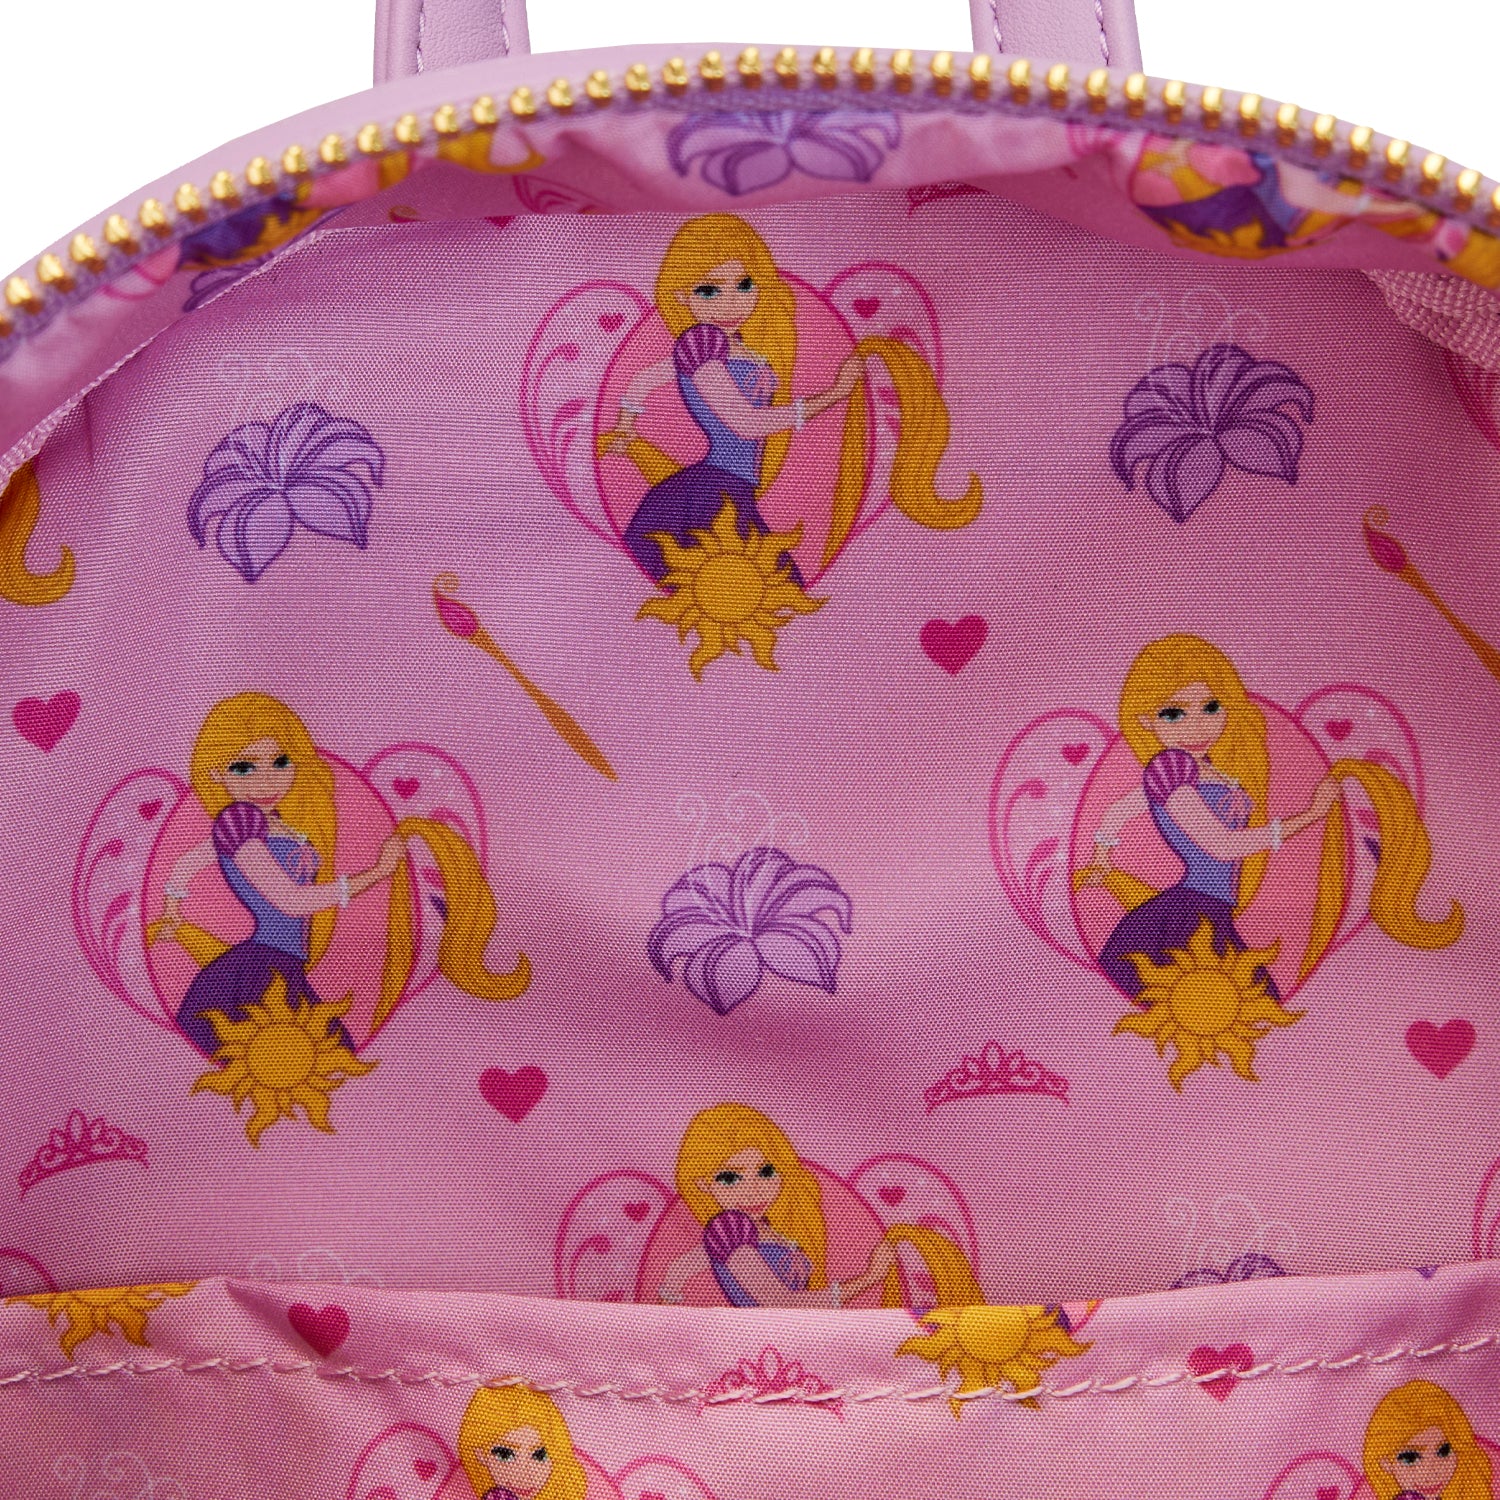 Disney Tangled Princess Castle Mini Backpack Loungefly